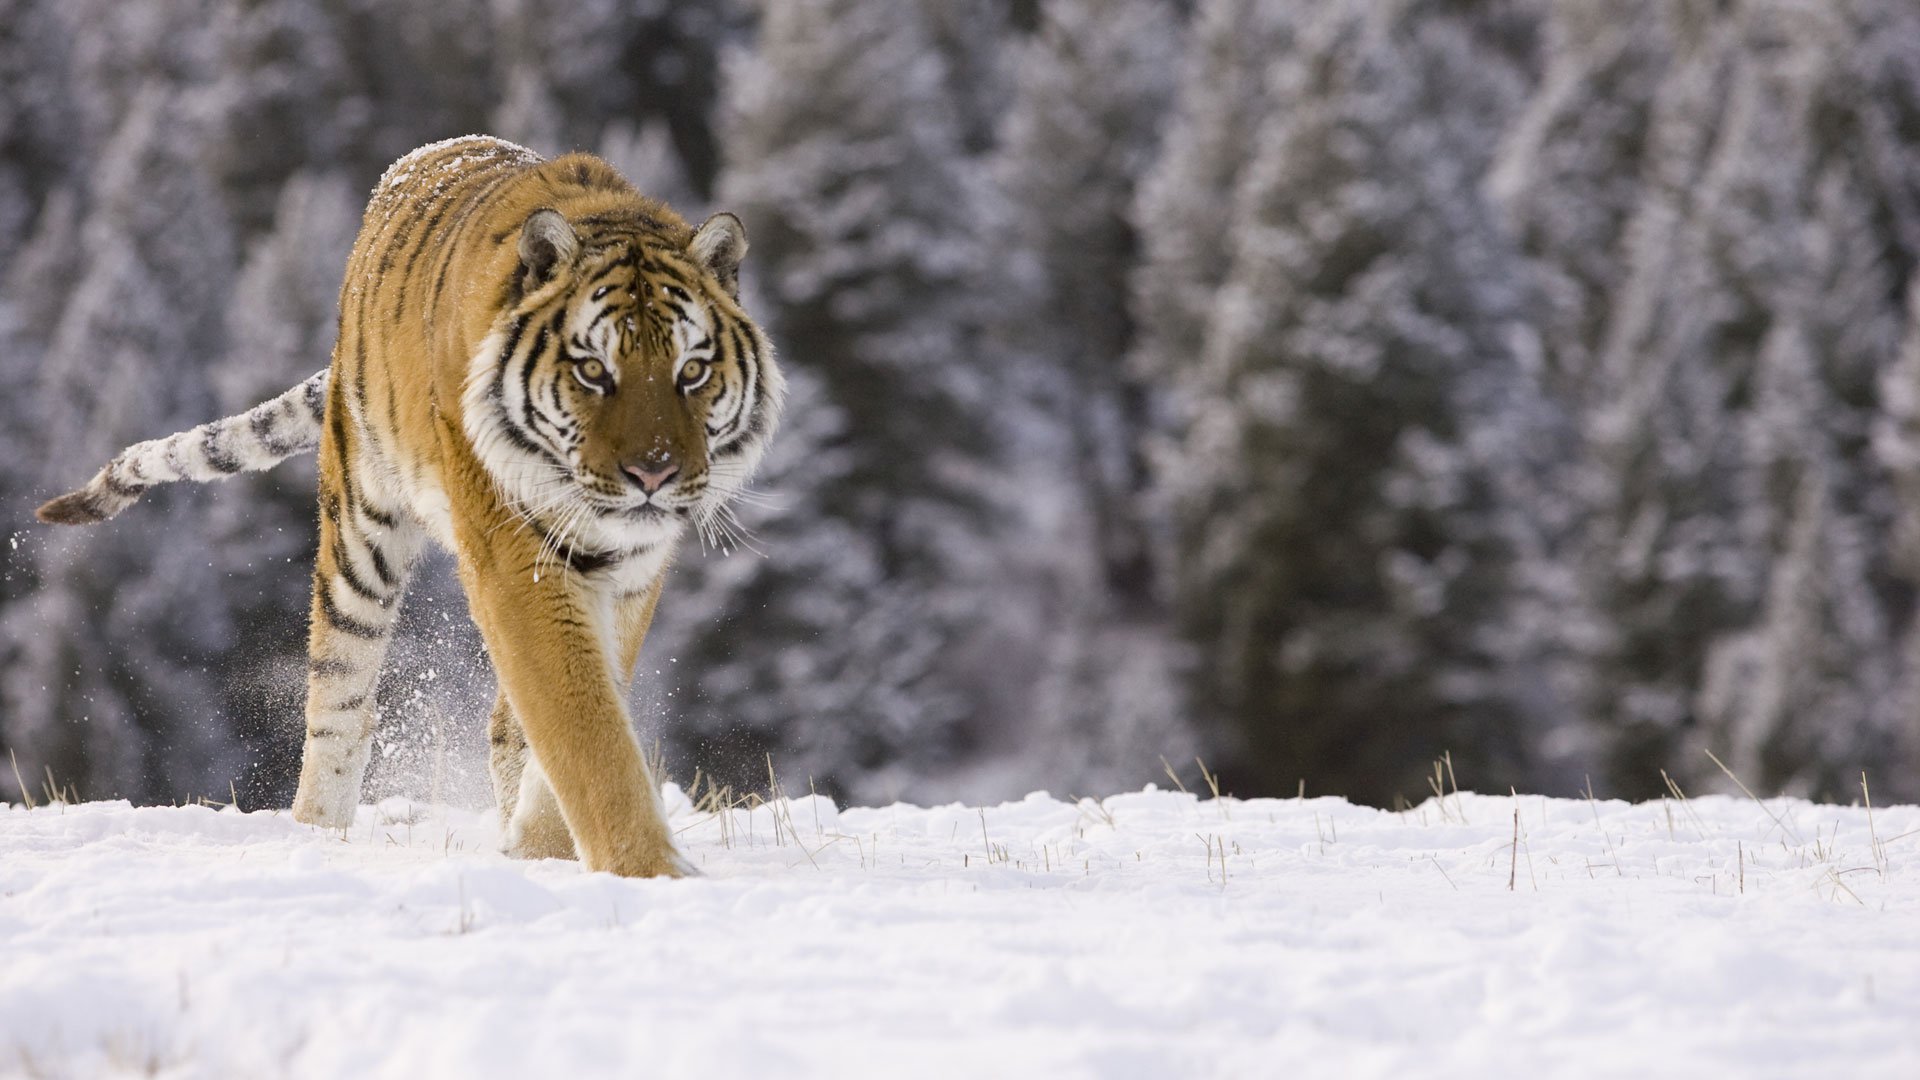 Tigre de siberie : taille, description, biotope, habitat, reproduction